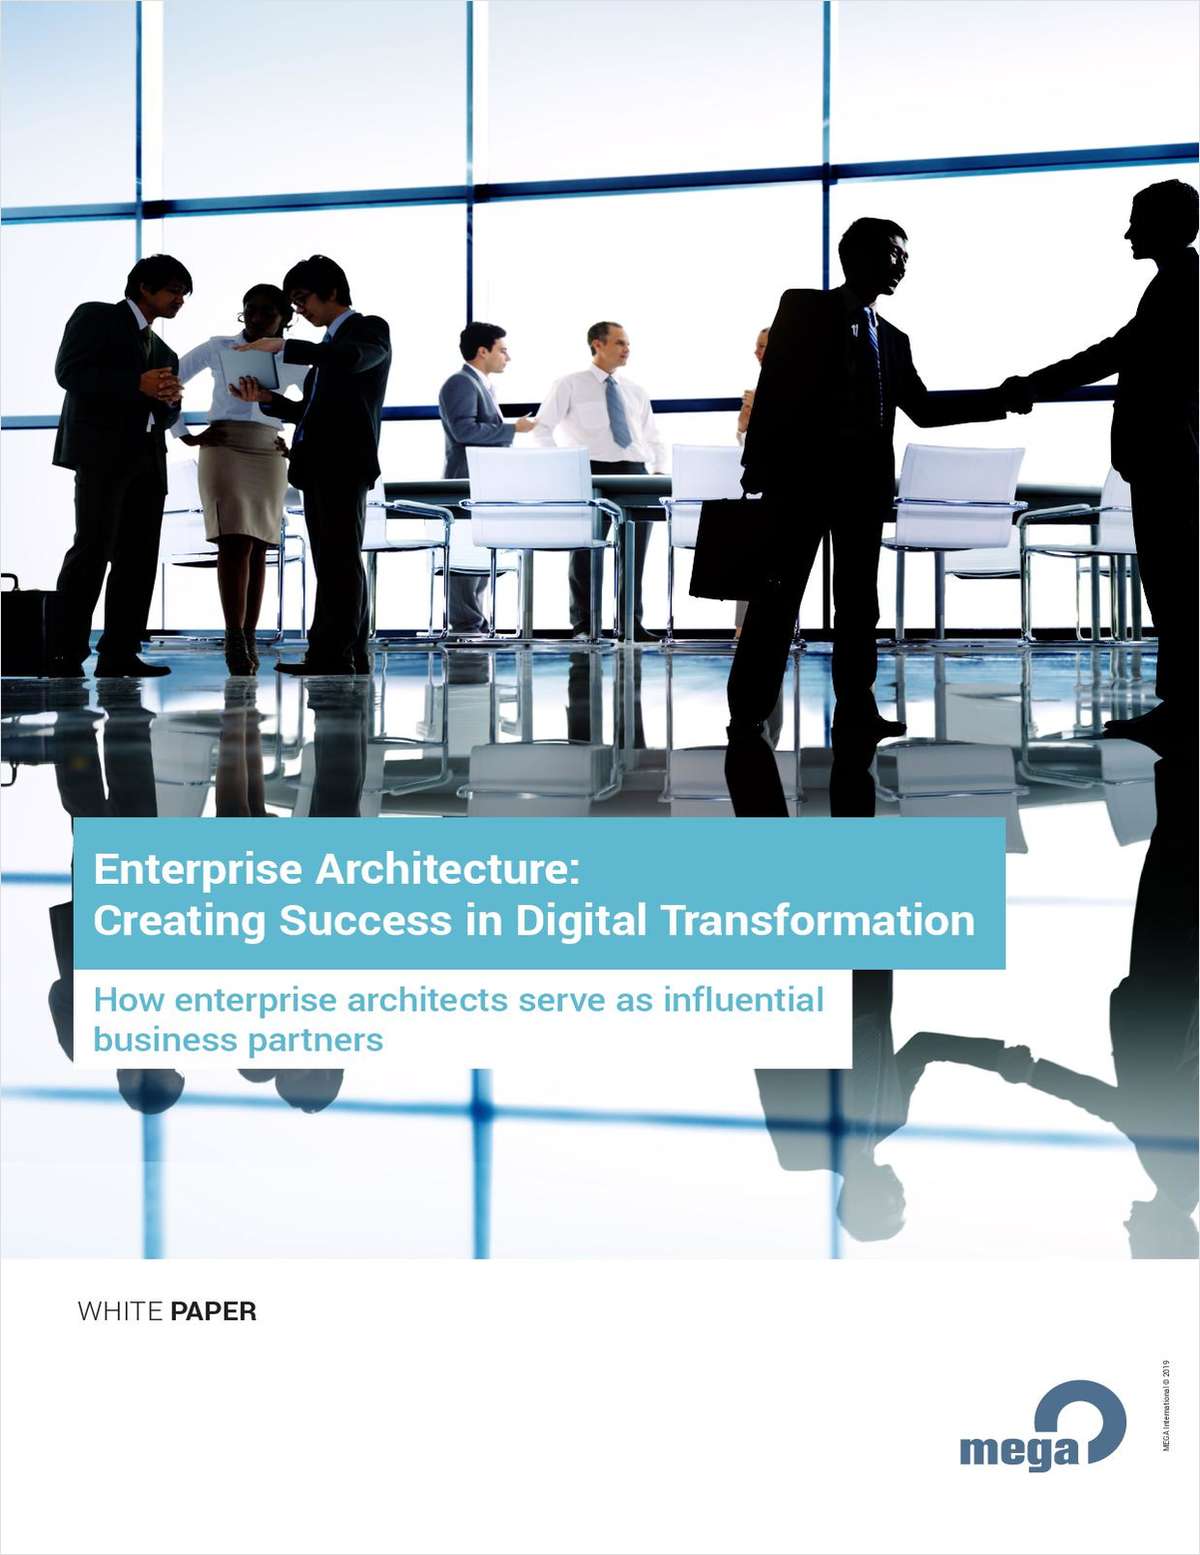 Enterprise Architecture: Creating Success in Digital Transformation